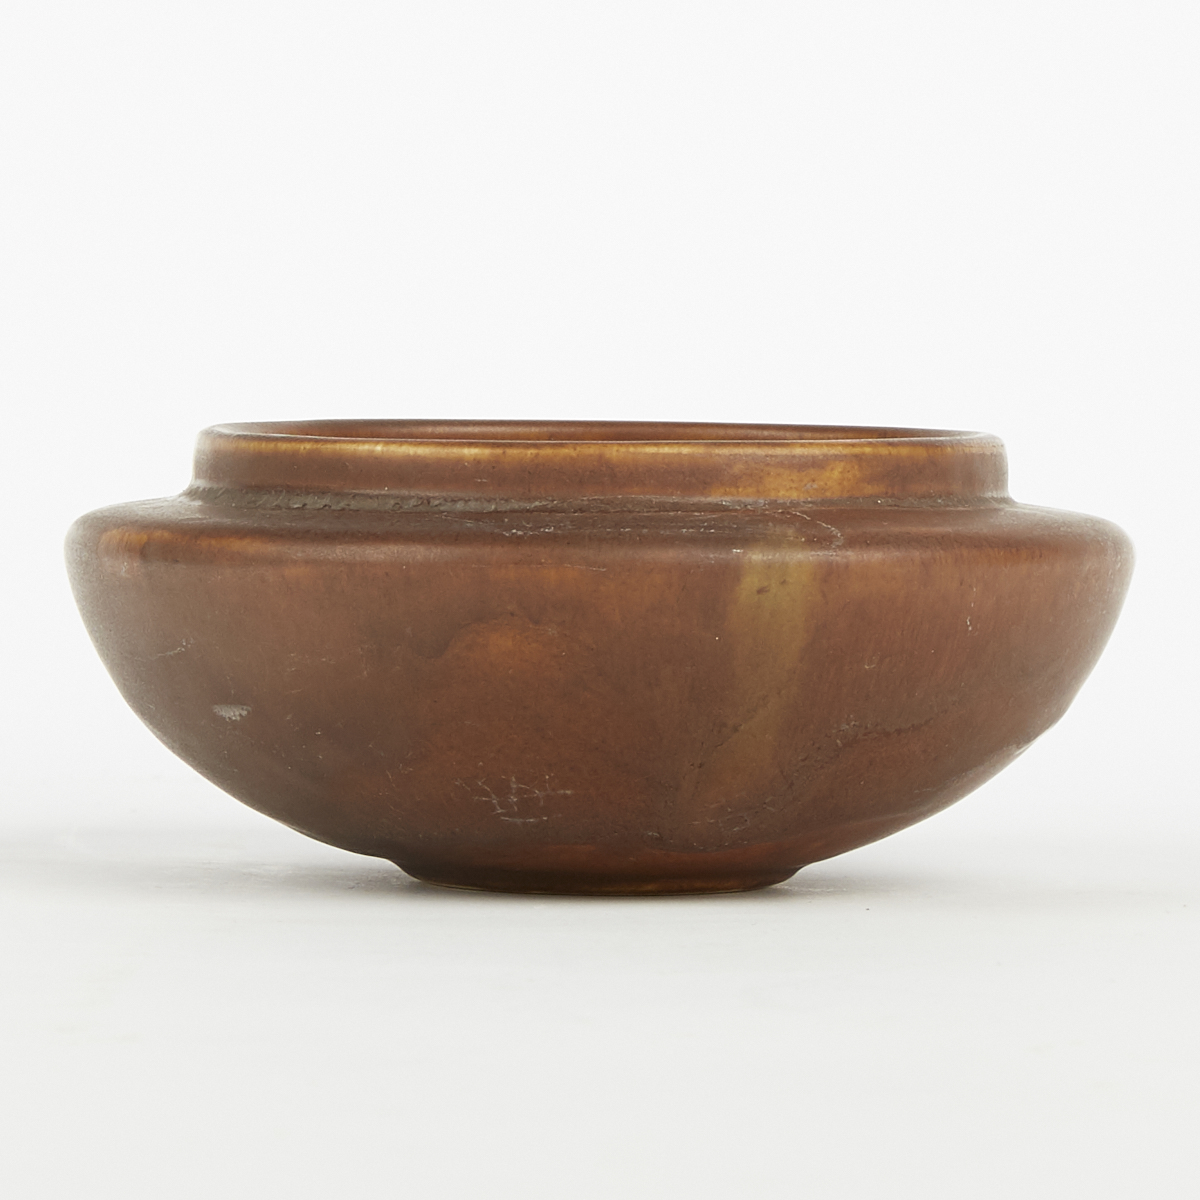 University of North Dakota 1912 Pottery Bowl - Image 2 of 5